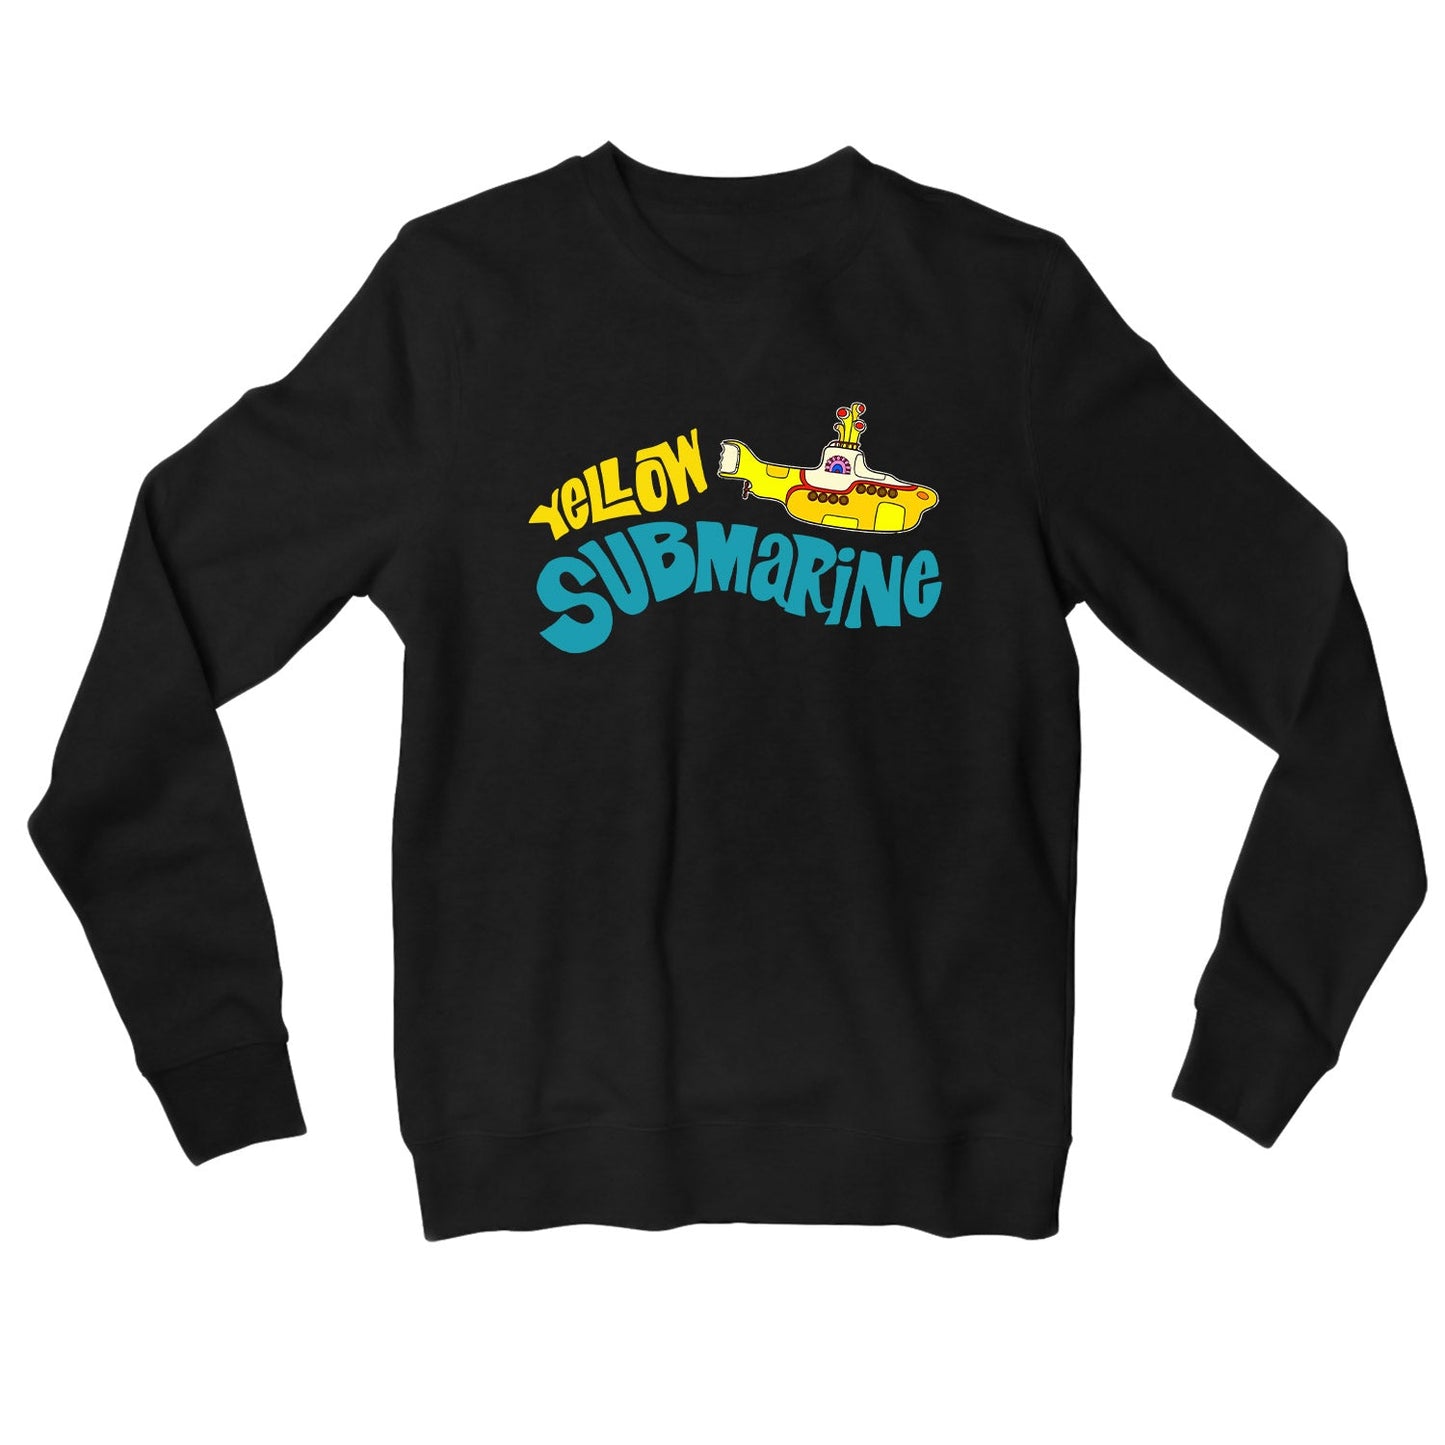 The Beatles Sweatshirt - Yellow Submarine Sweatshirt The Banyan Tee TBT